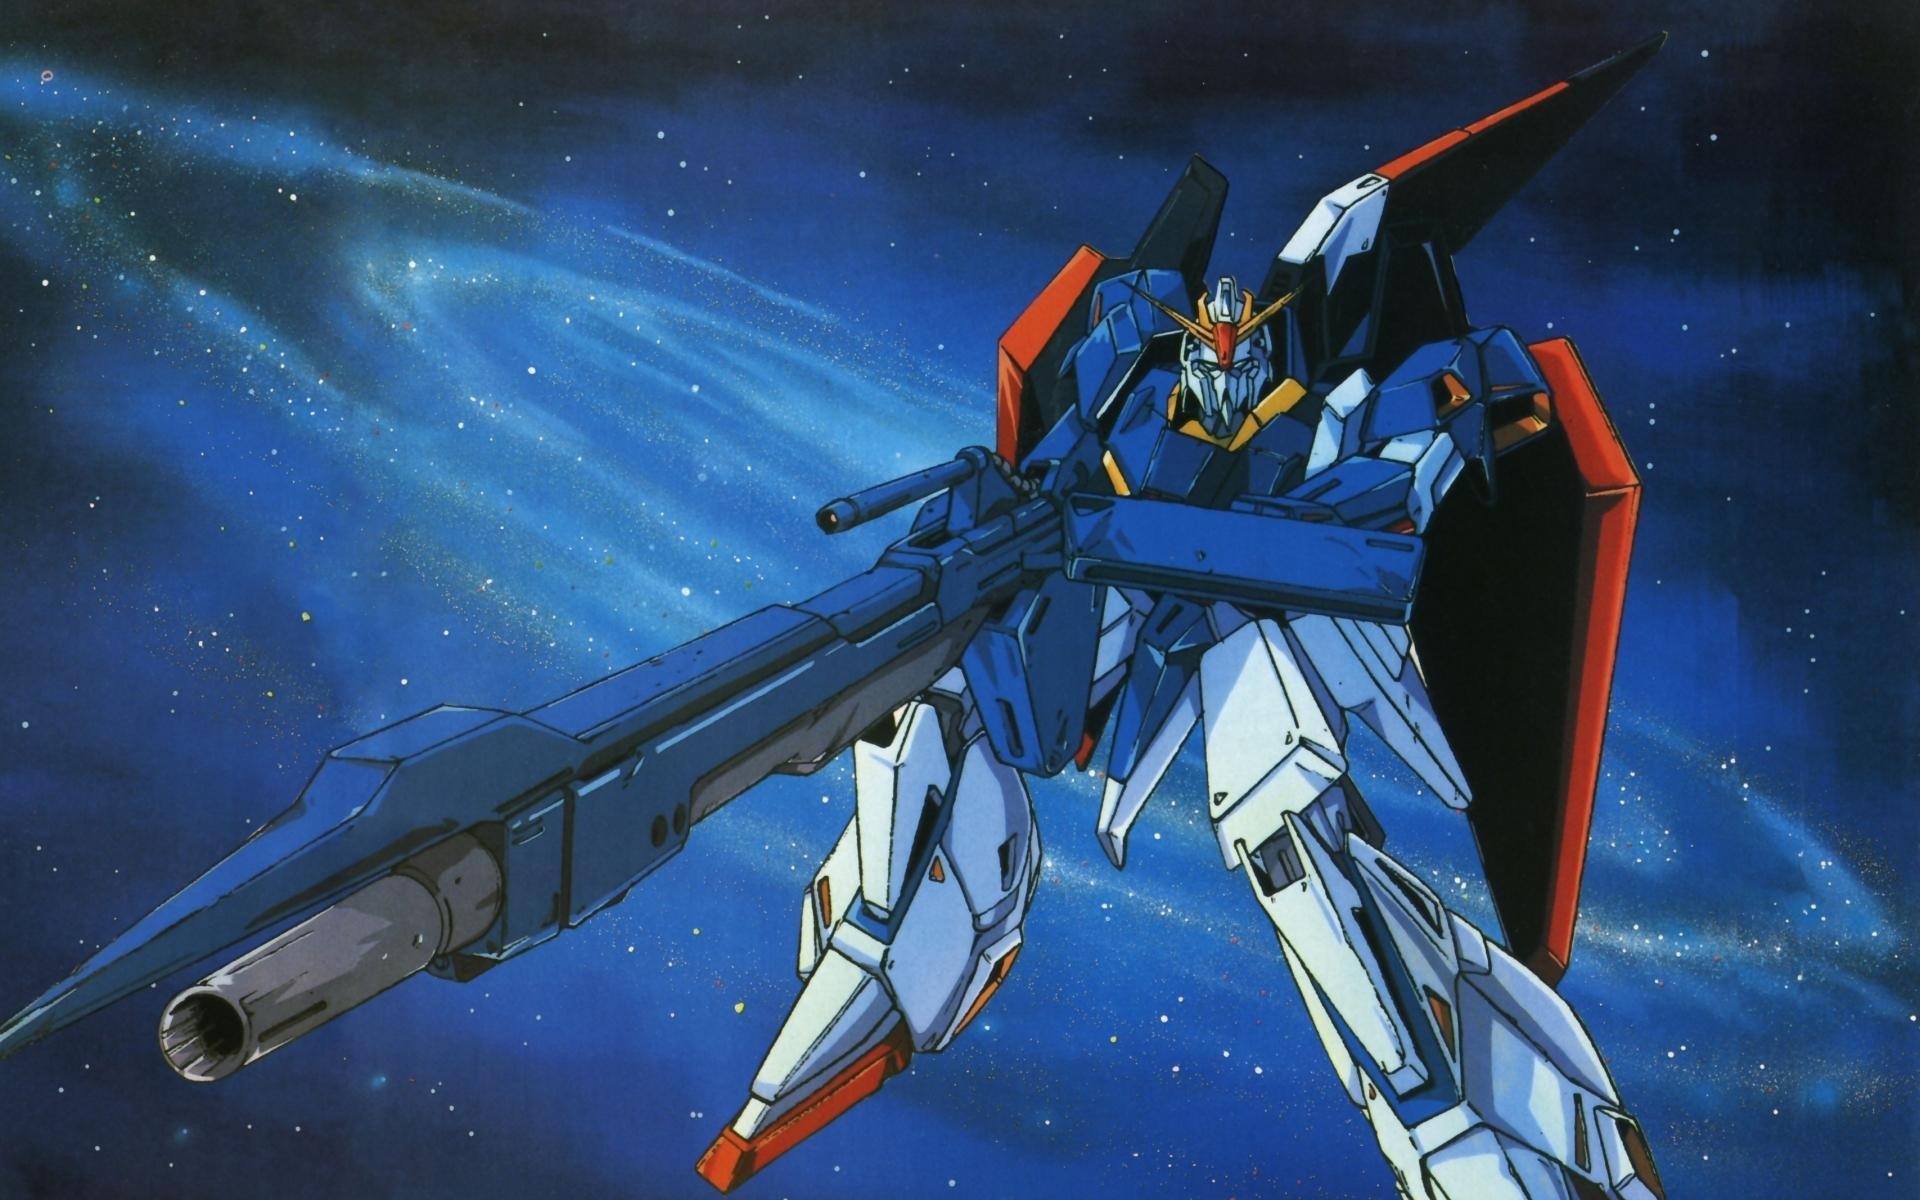 Gundam, Anime vehicle wallpapers, Futuristic spacecraft, Intergalactic imagery, 1920x1200 HD Desktop